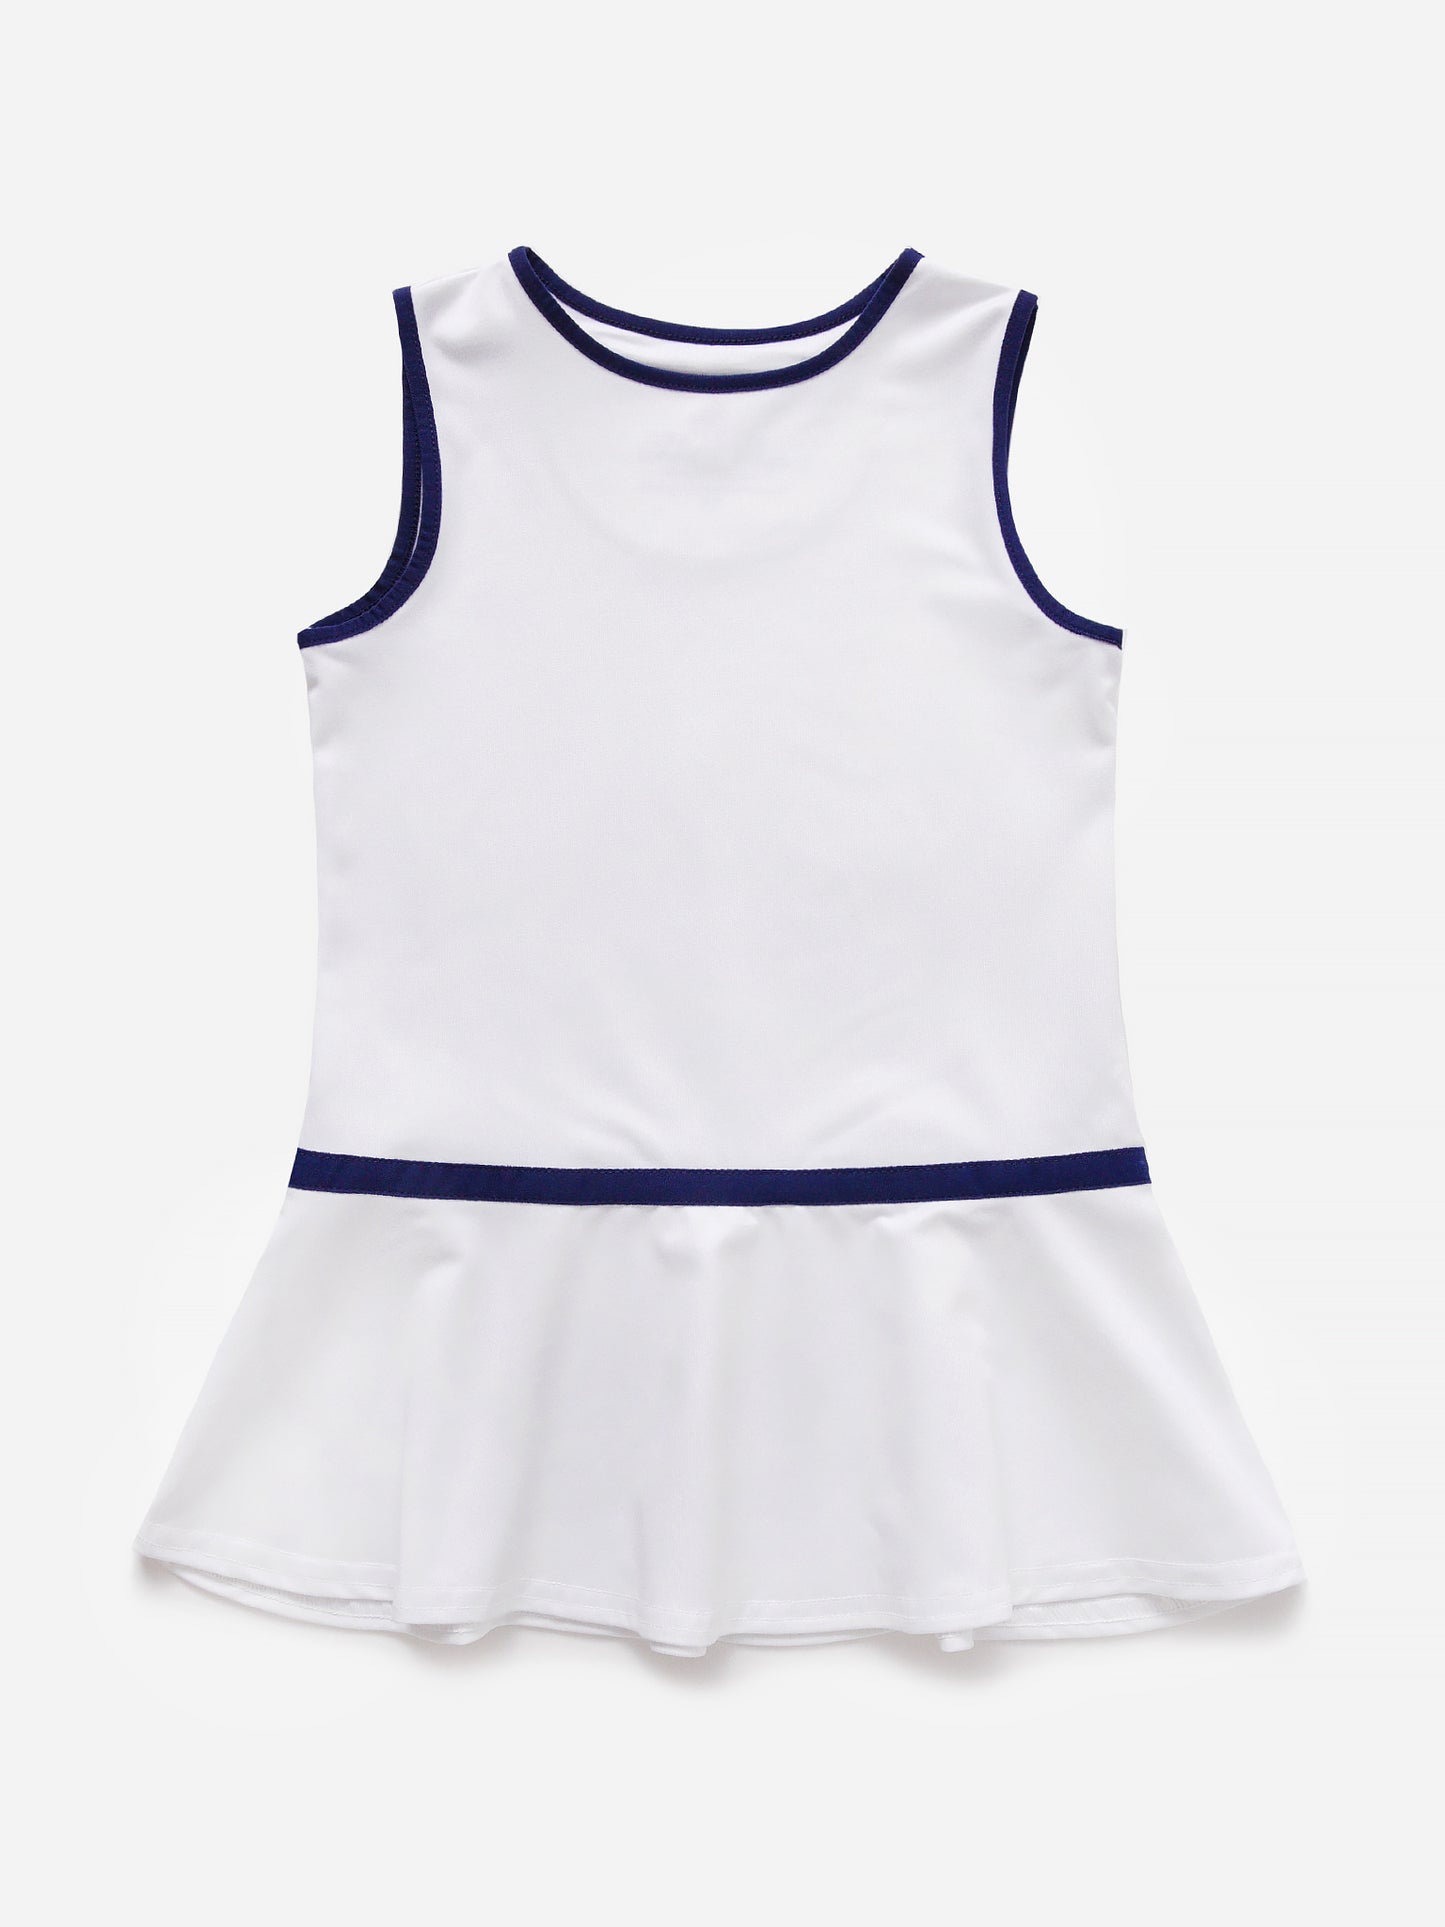 Classic Prep Girls' Tennyson Tennis Performance Dress